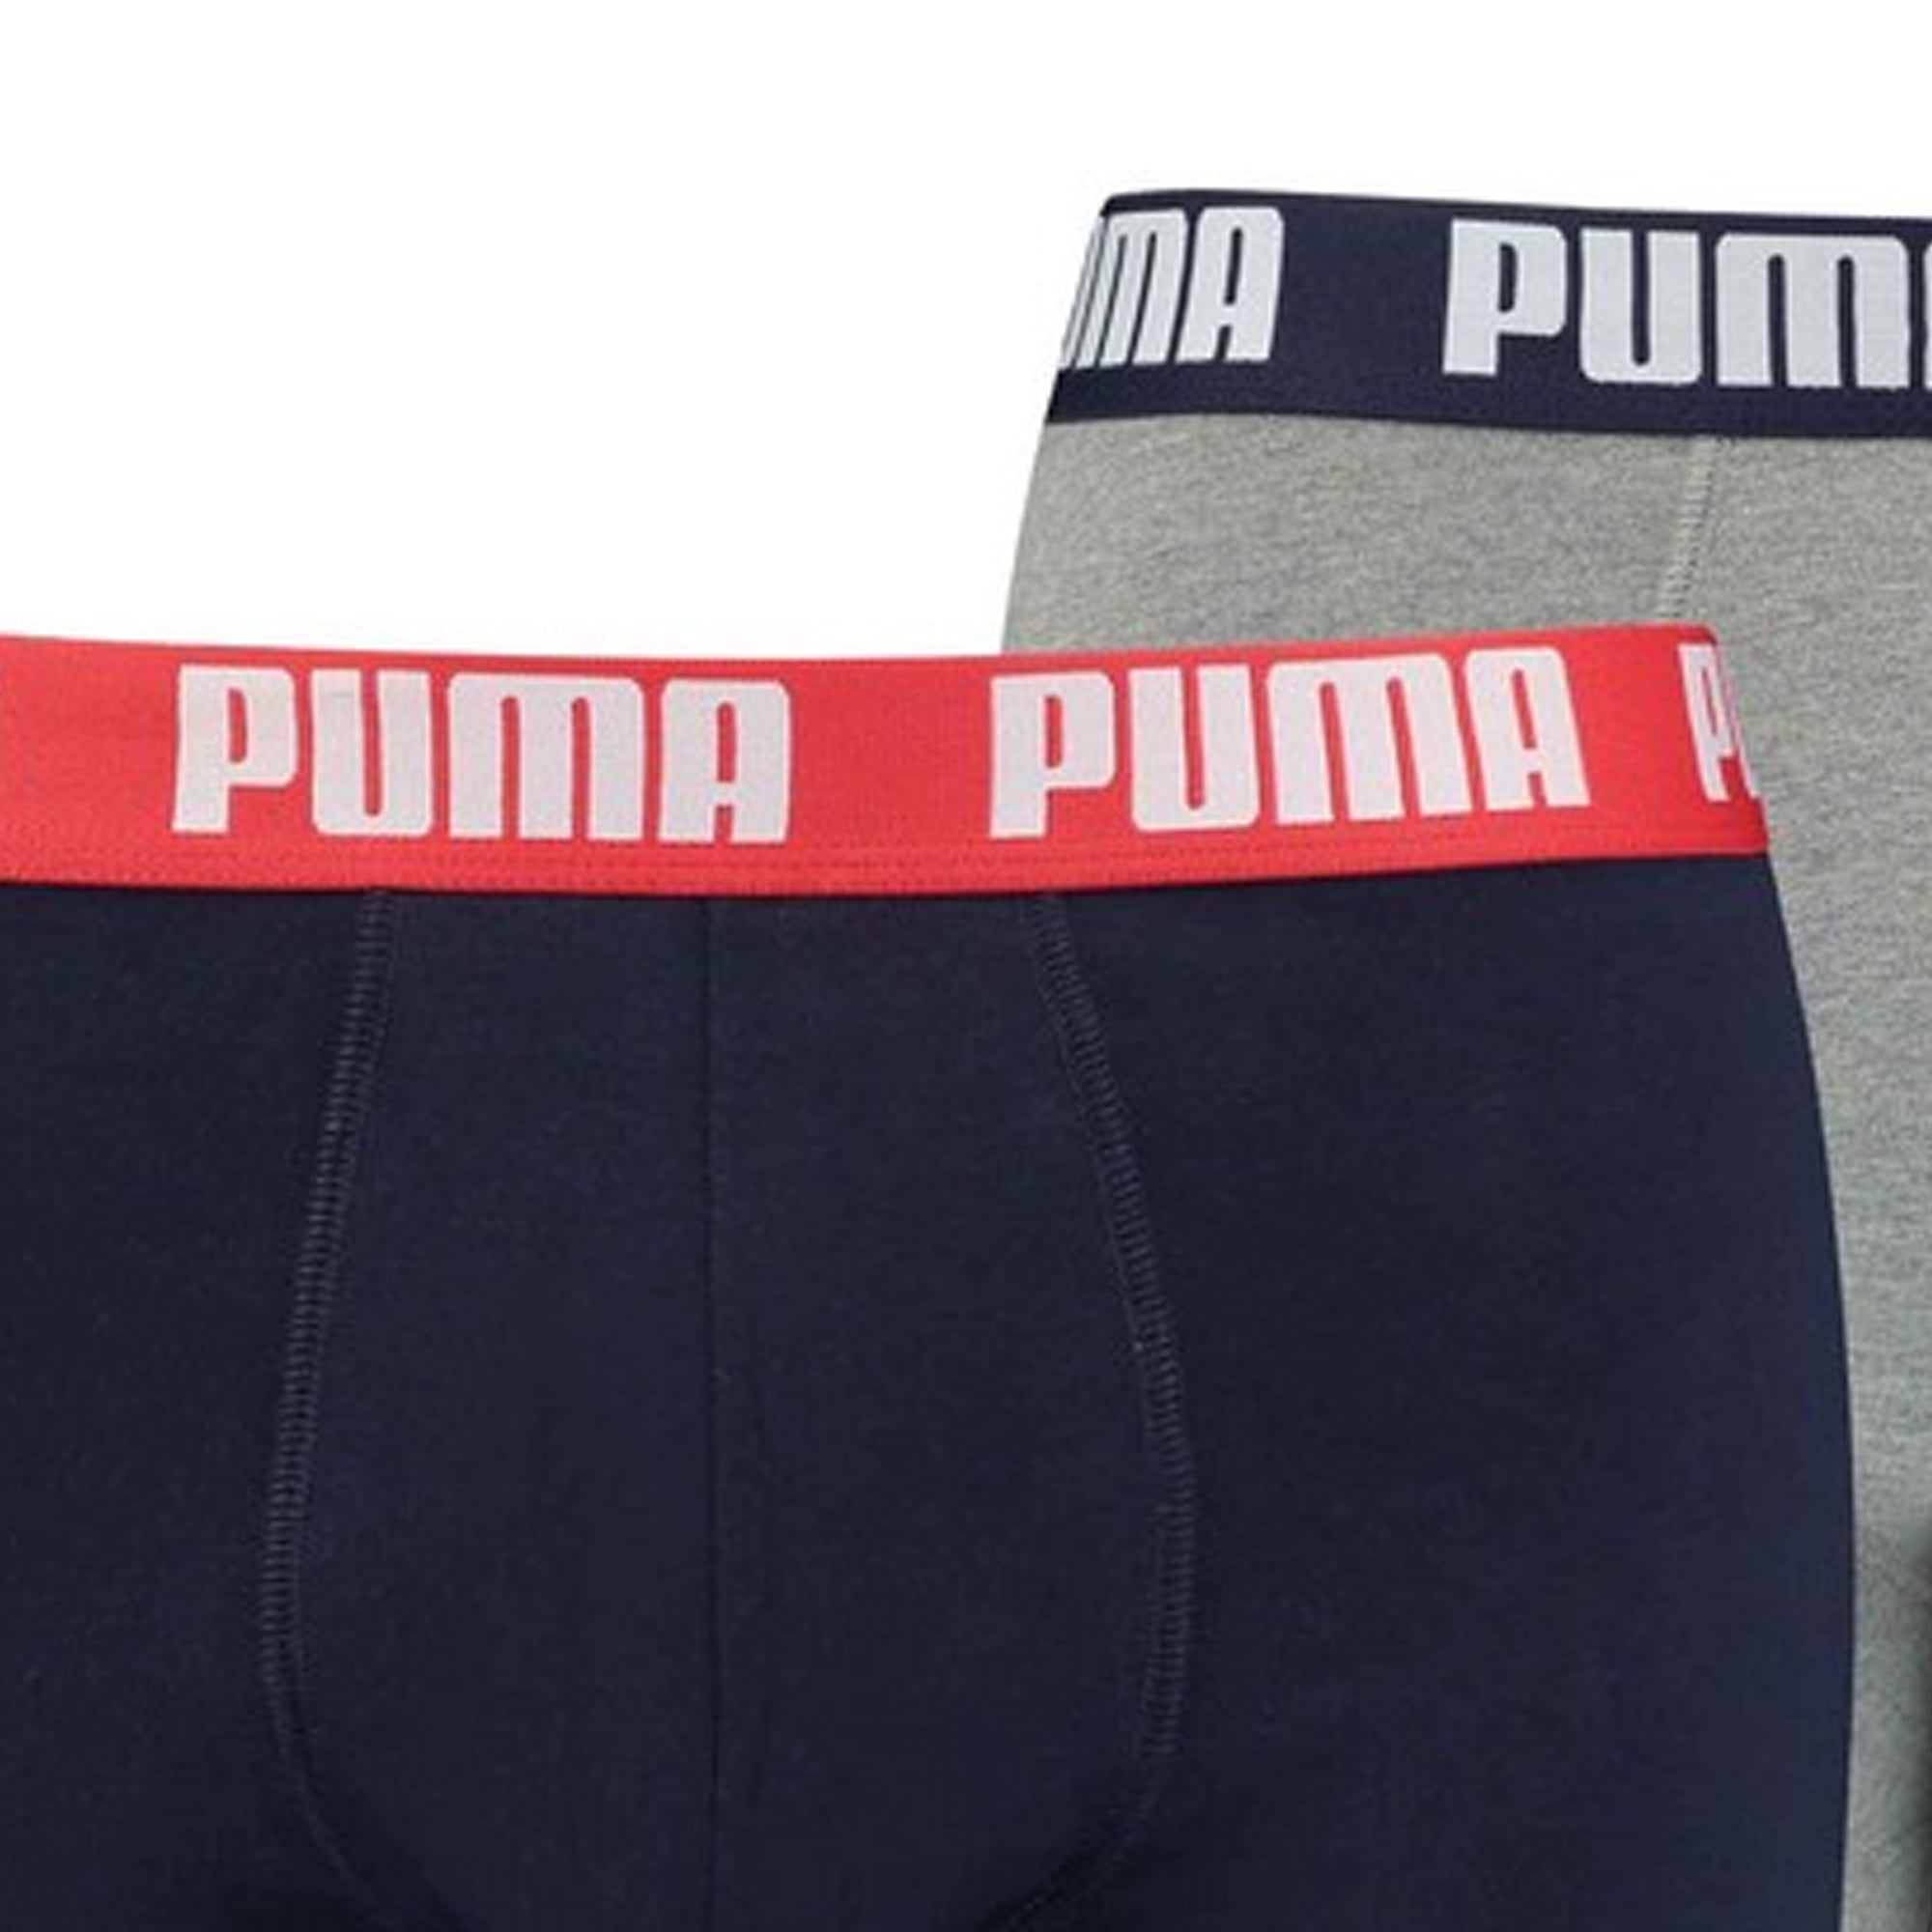 Puma Mens Basic Boxer Shorts (Pack of 2)